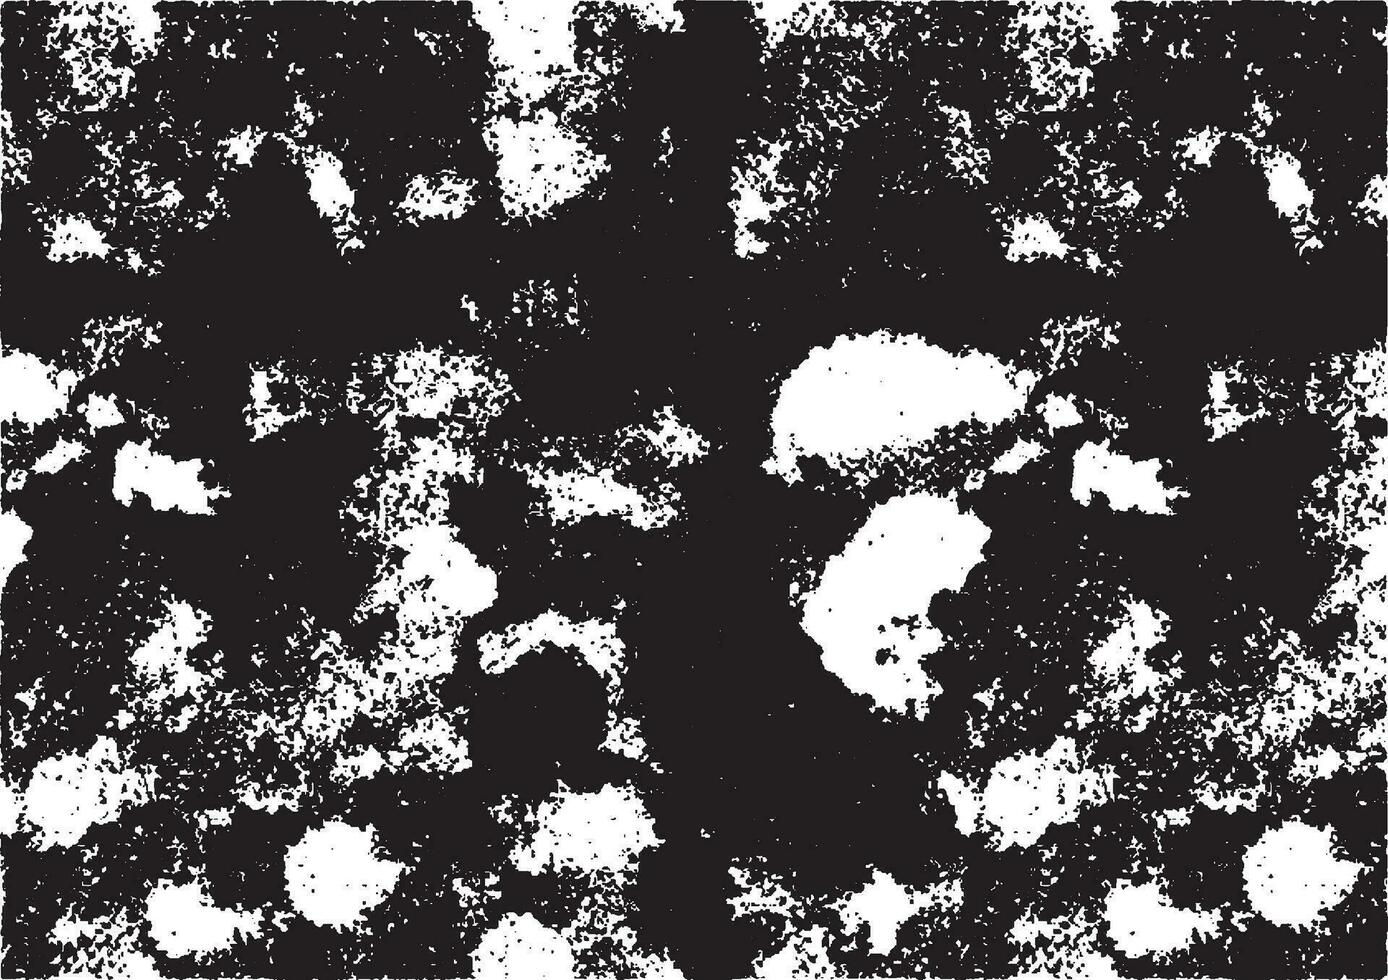 Rake vector texture overlay. Monochrome abstract rake background